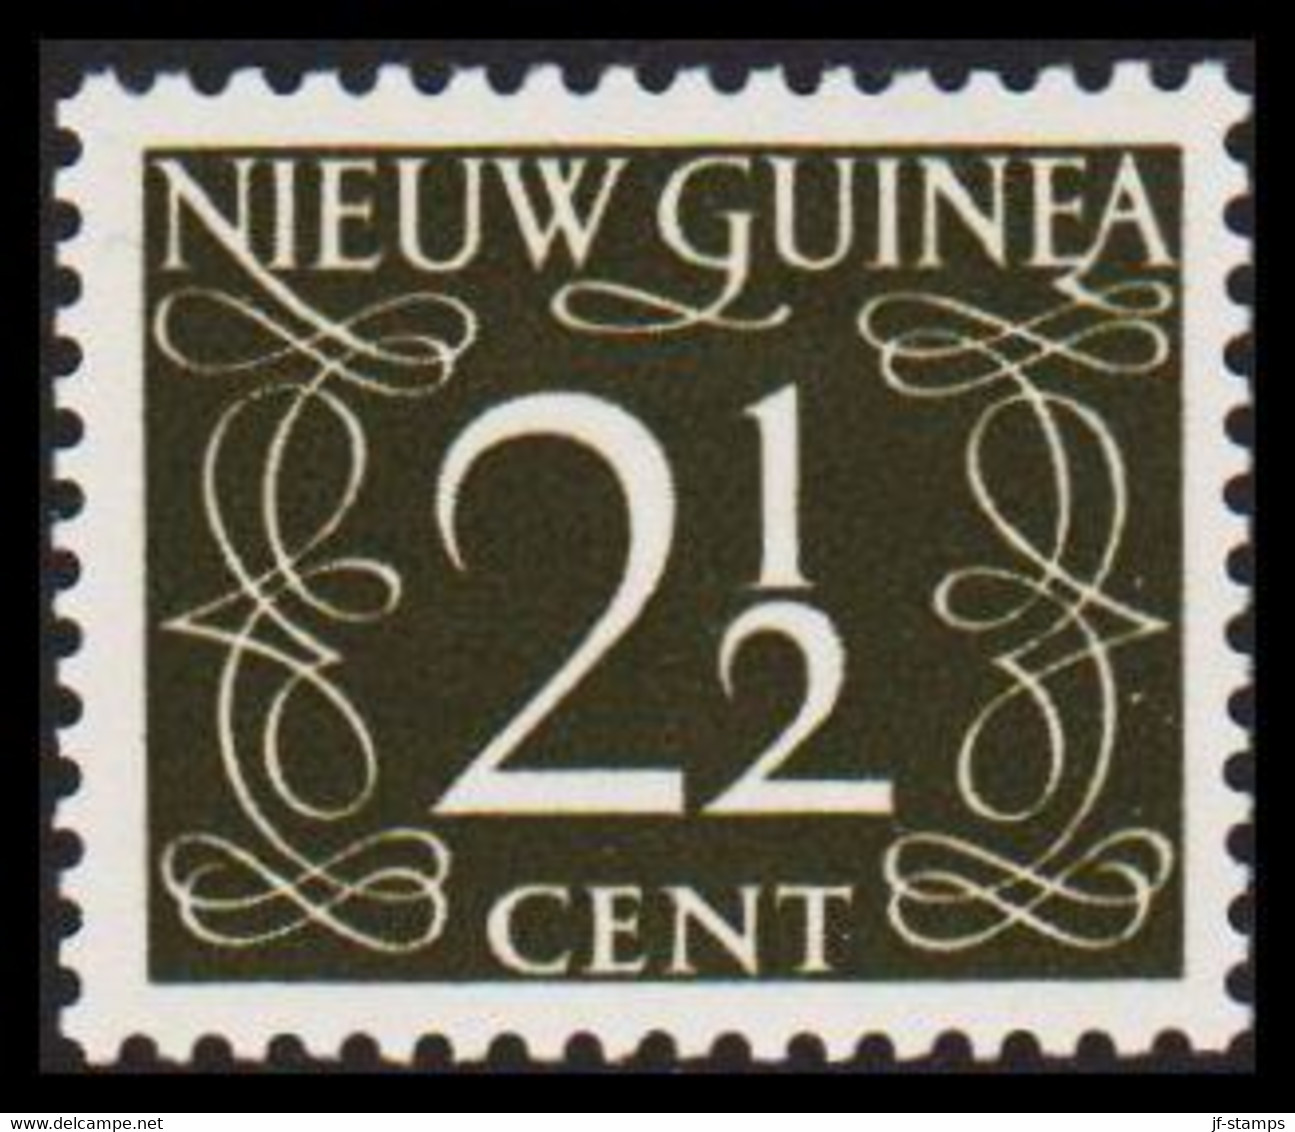 1950. NIEUW GUINEA. Nummerals- Type 2½ CENT Hinged.  - JF529320 - Netherlands New Guinea